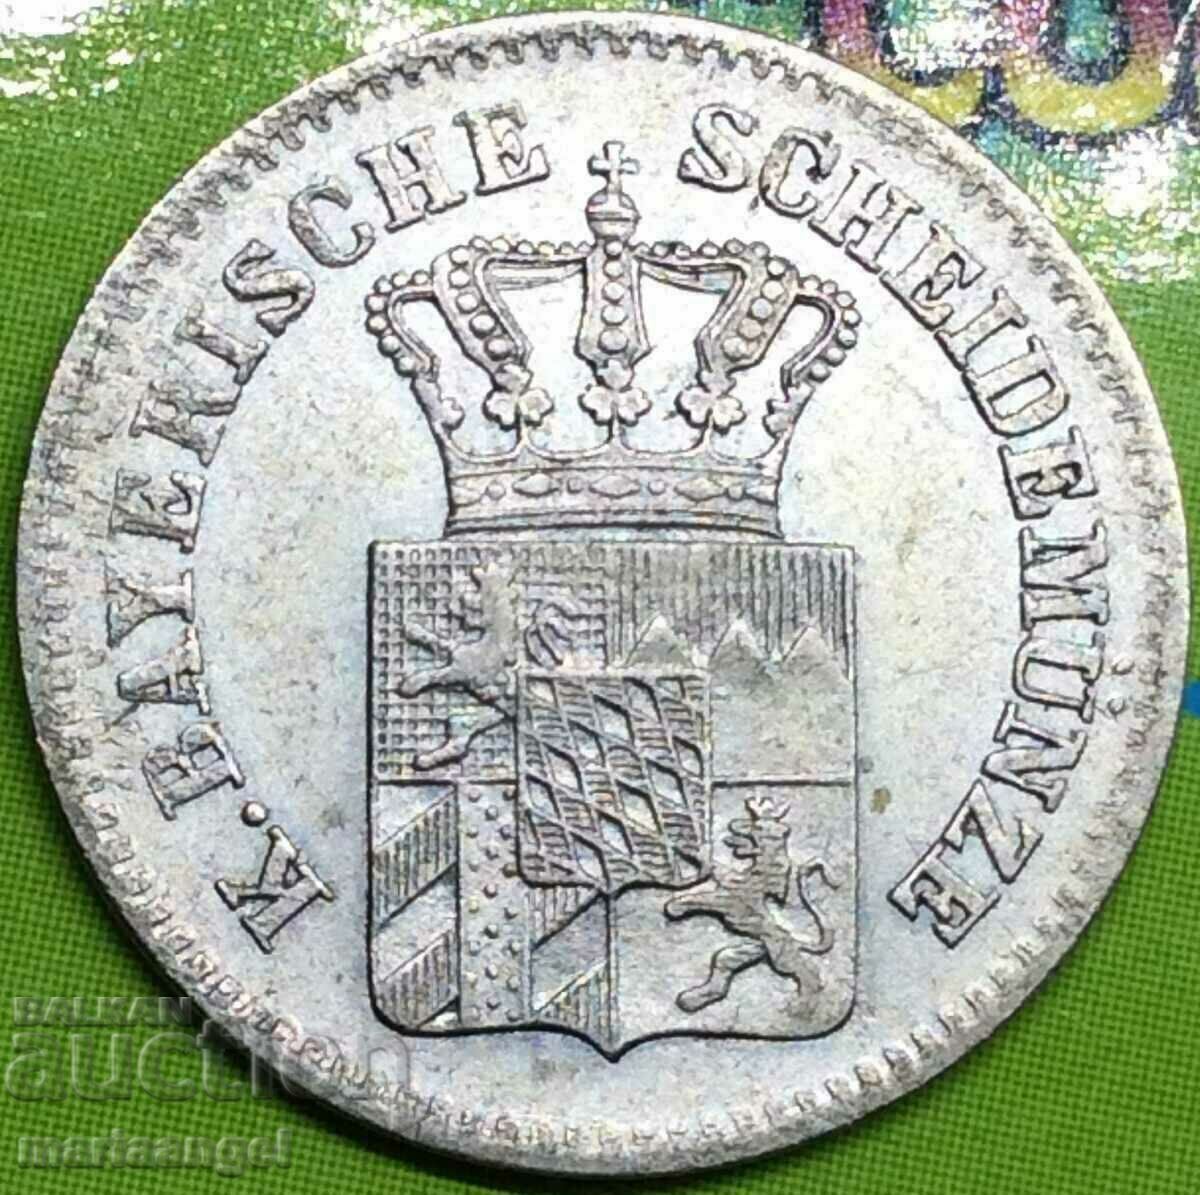 3 Kreuzer 1865 Bayern Germany silver